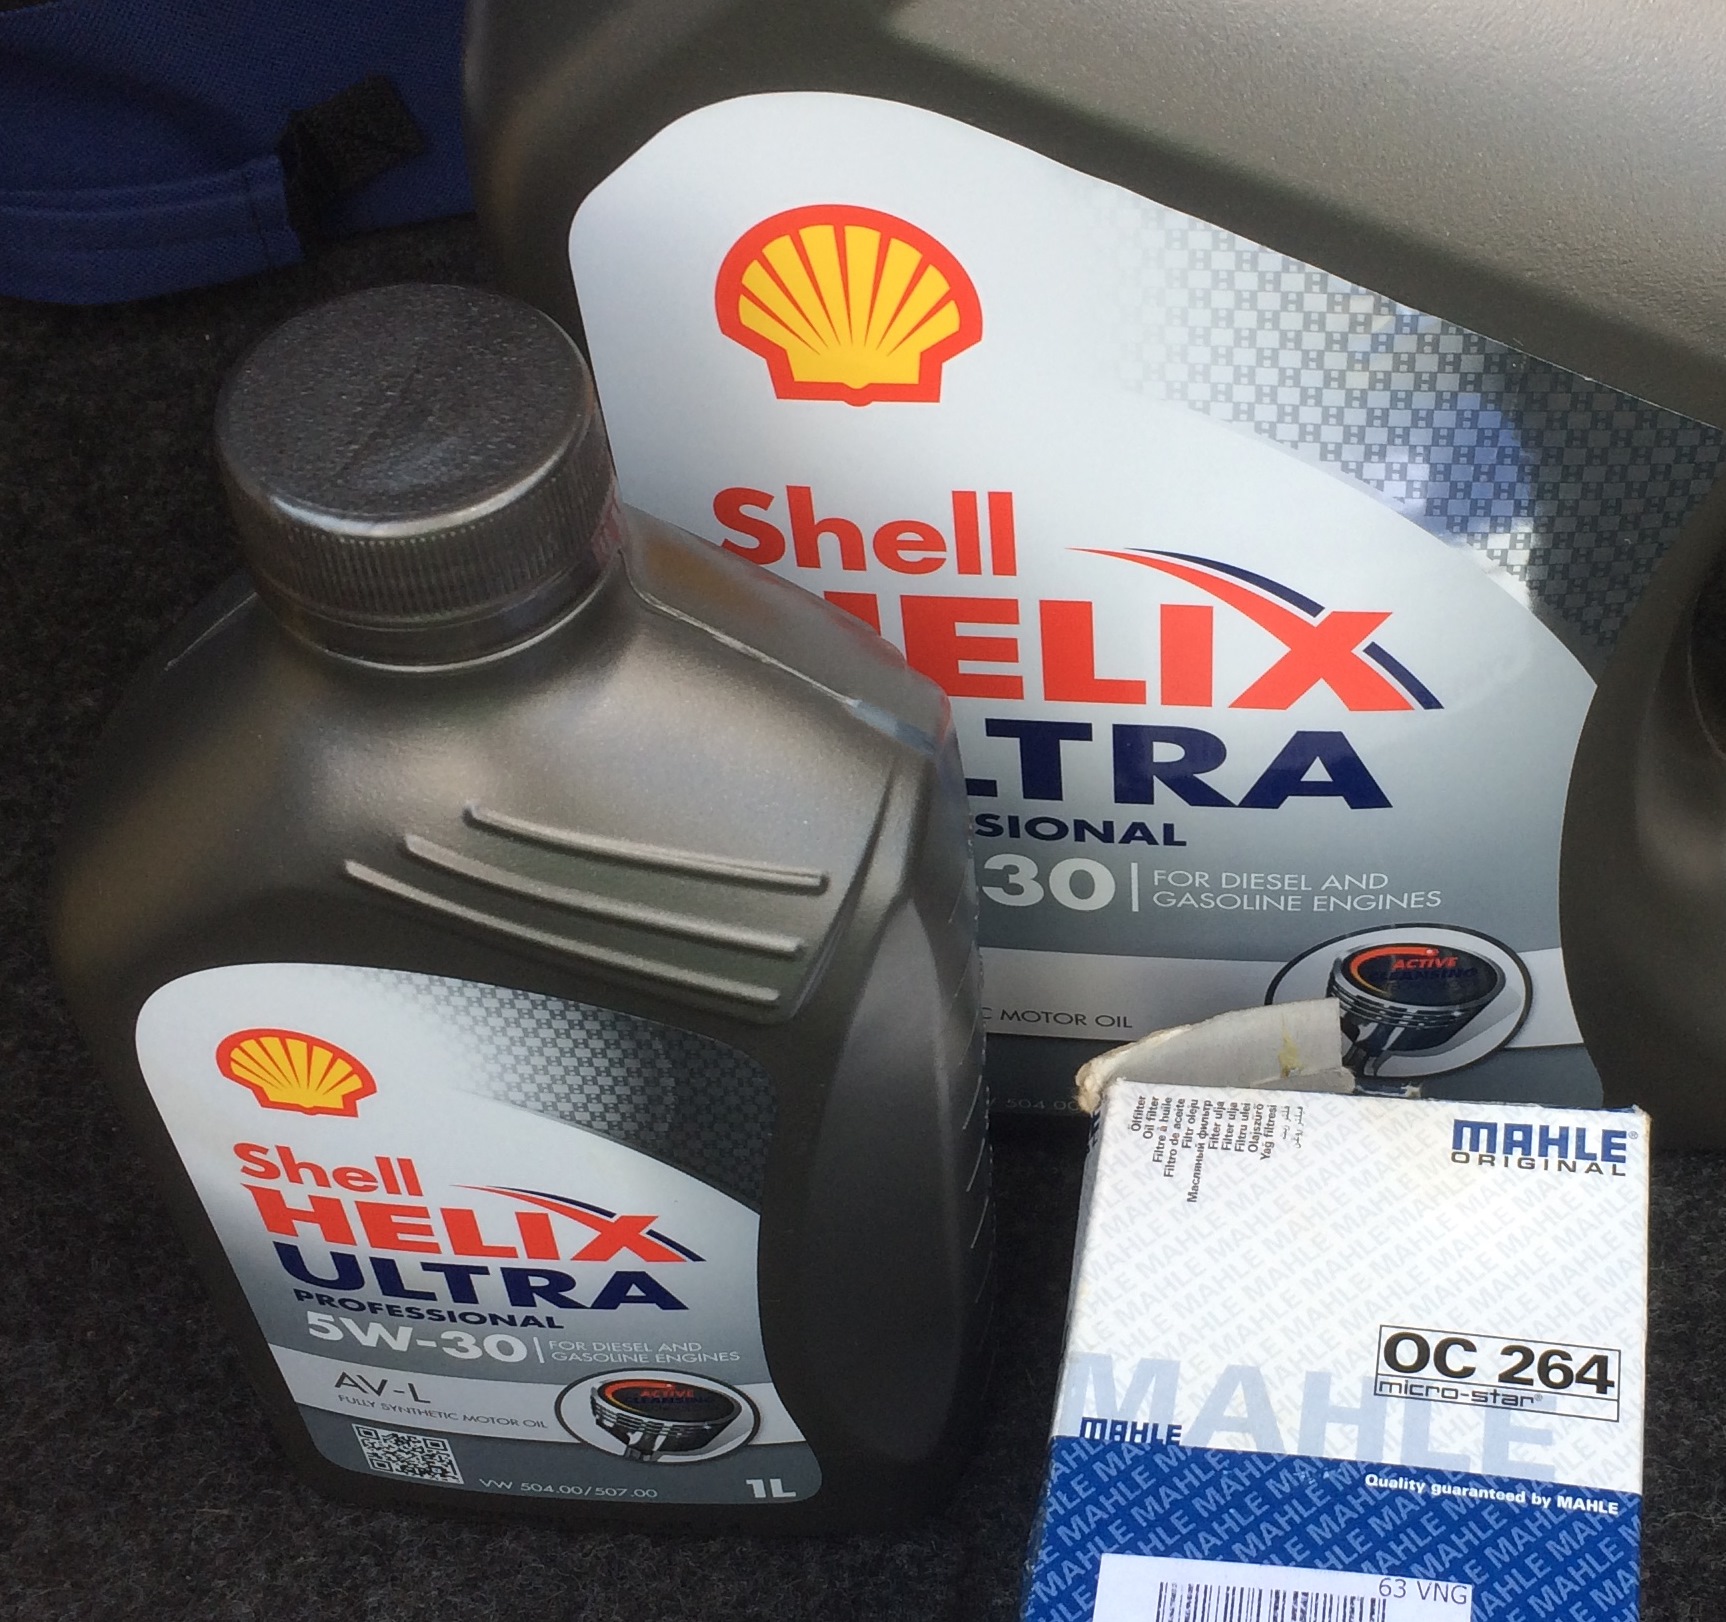 Ultra av. Vw504 масло Skoda Octavia Shell. Спецификация масла VW Shell. Масло Шелл на доливку 5 в 30 фото цены.